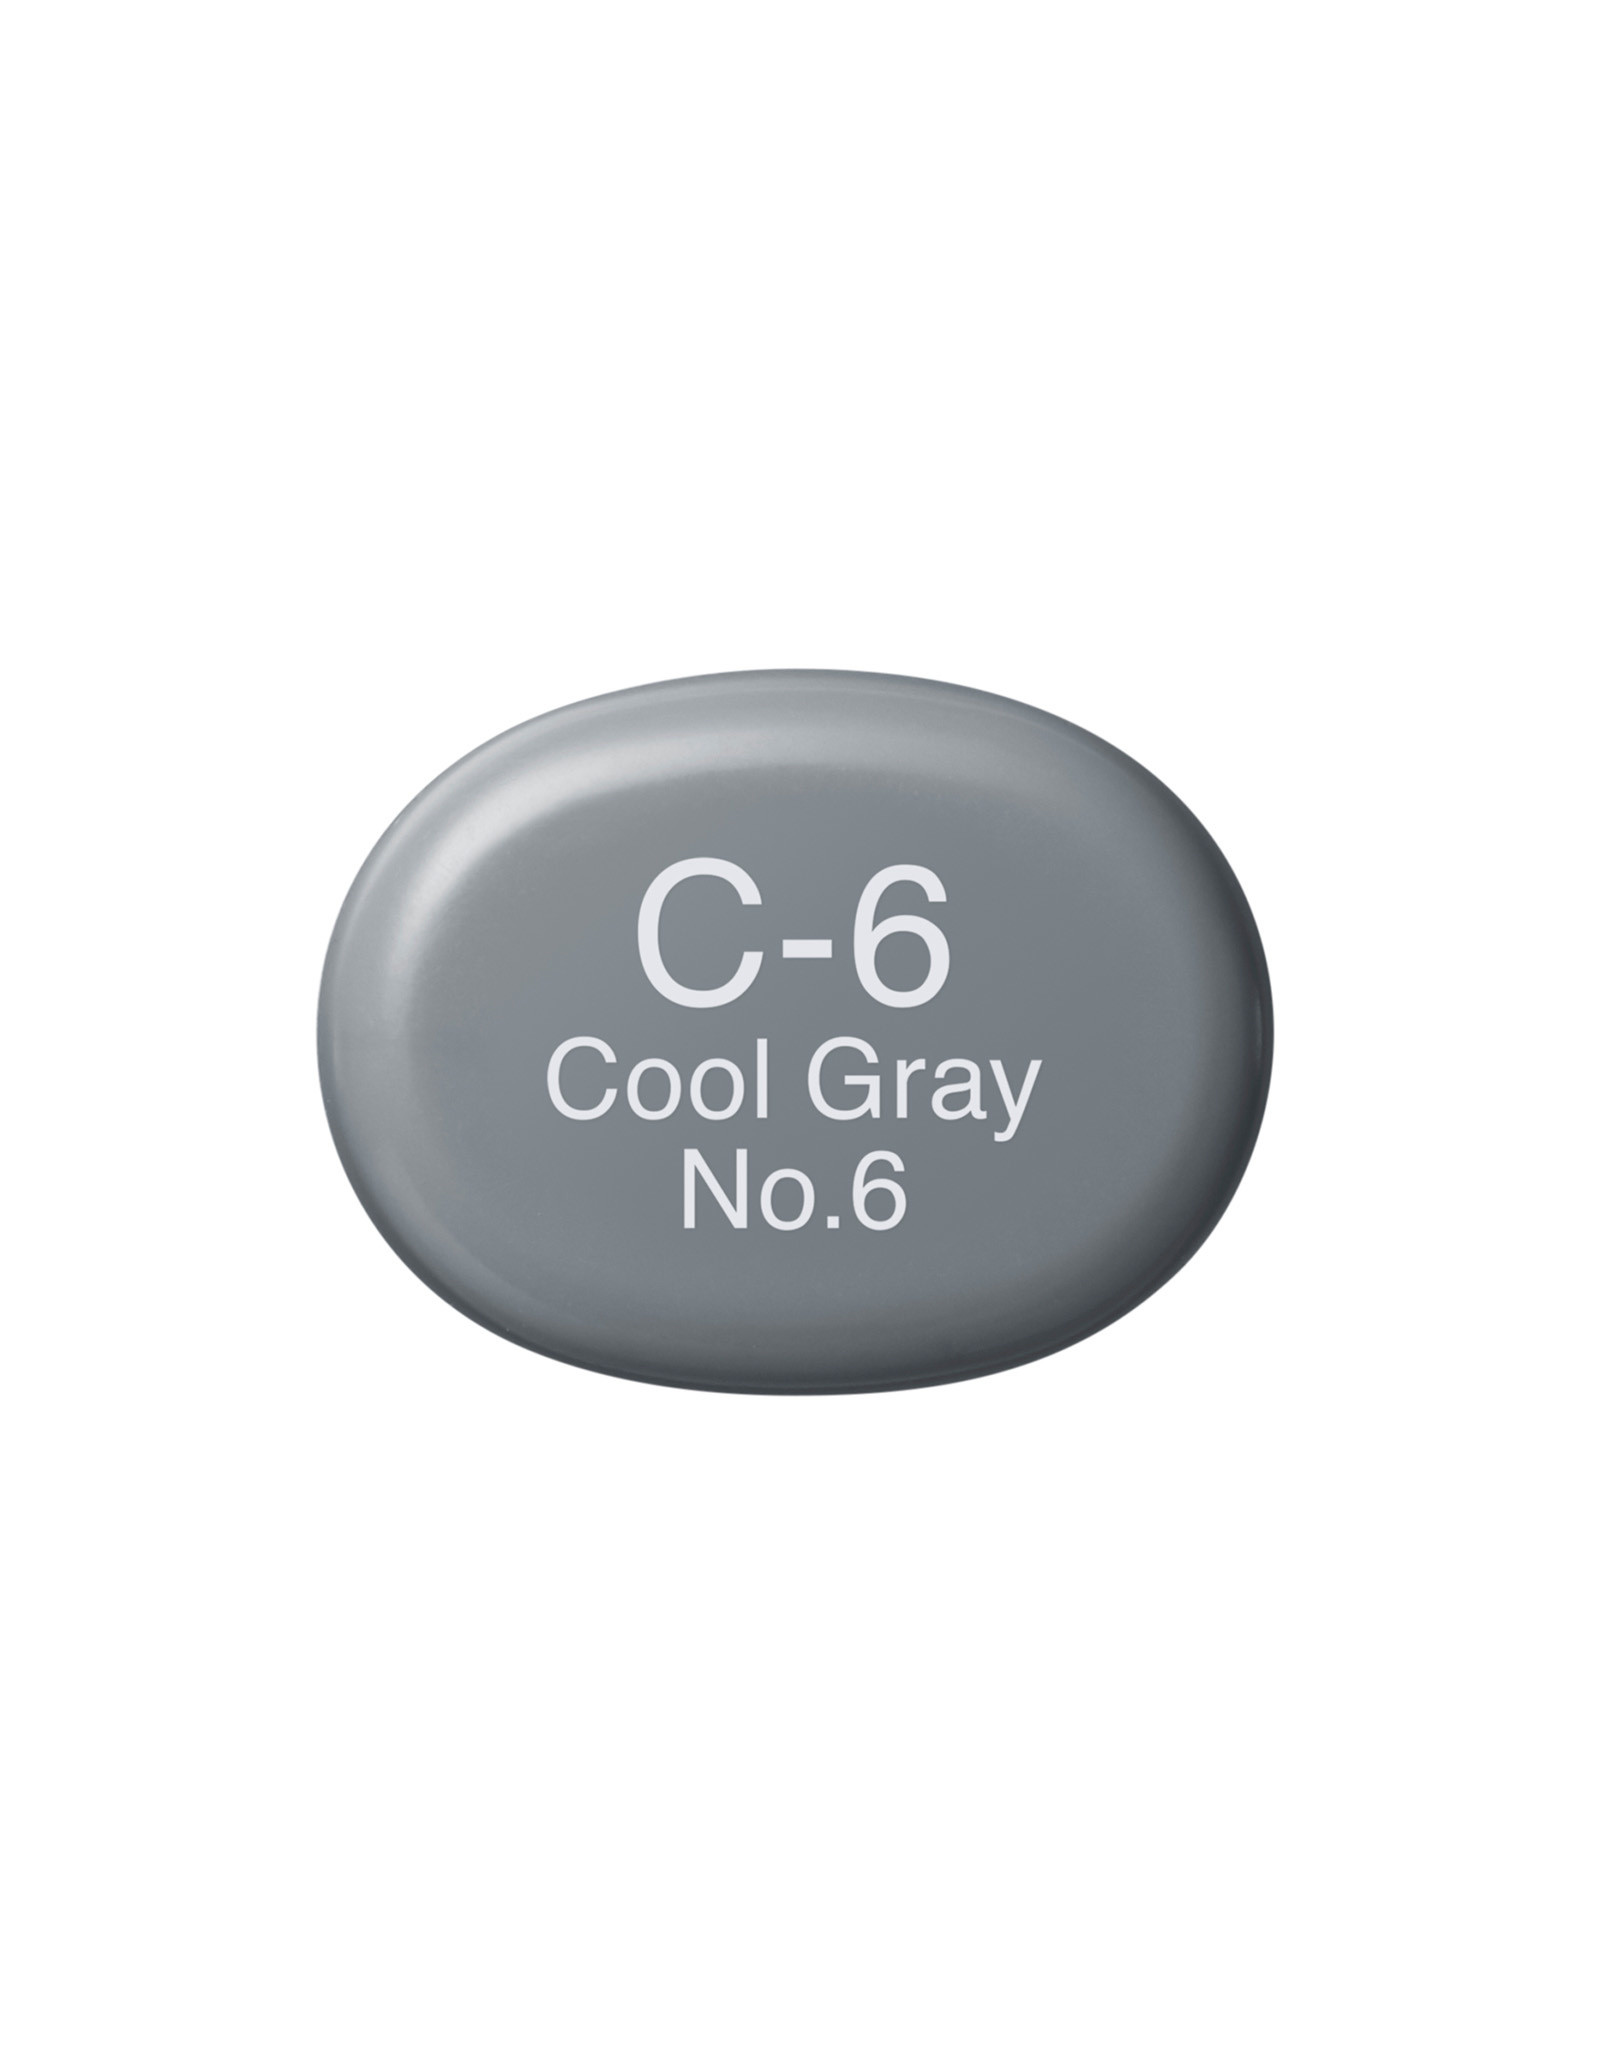 COPIC COPIC Sketch Marker C6 Cool Gray